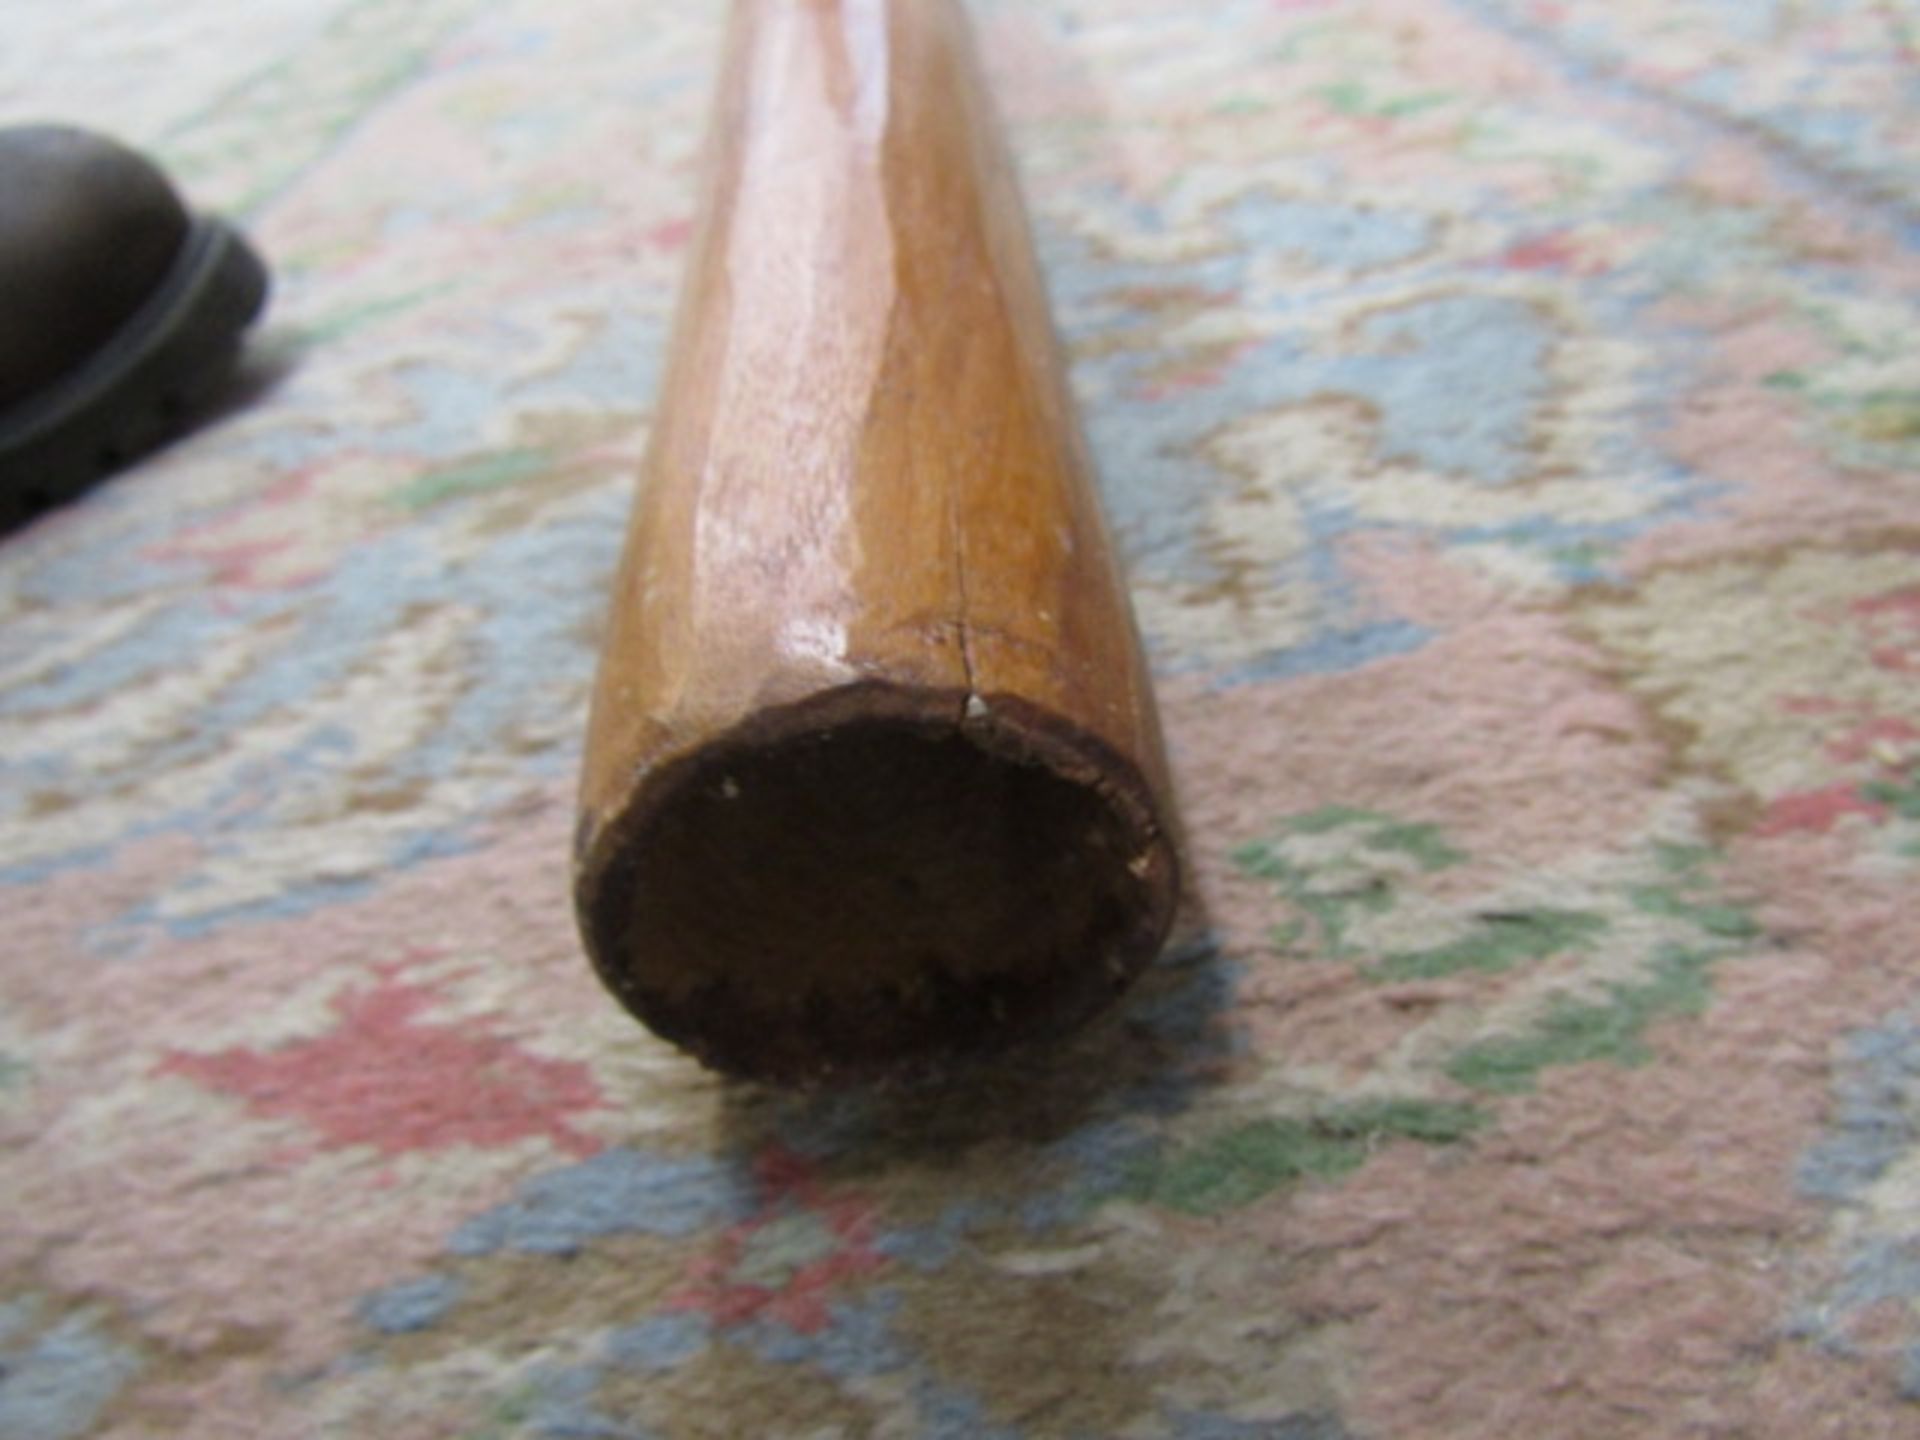 A didgeridoo - Image 4 of 5